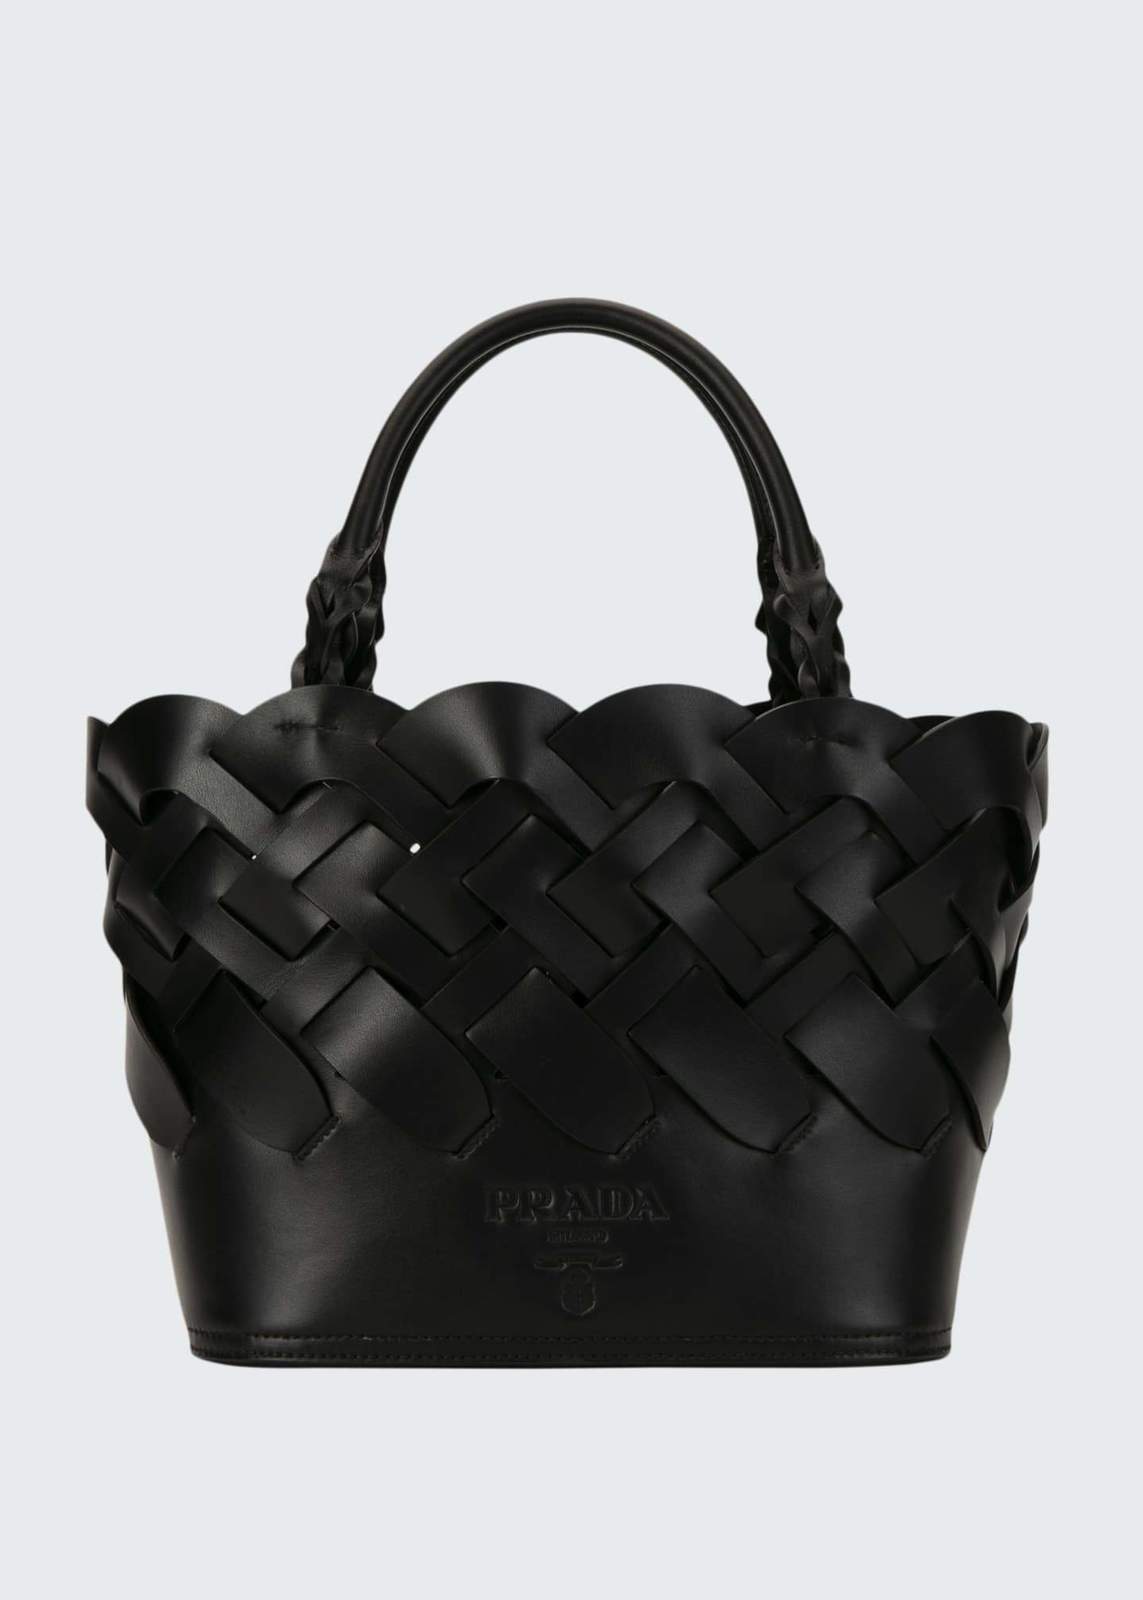 Prada Woven Leather Bucket Tote Bag - Handbags & Purses